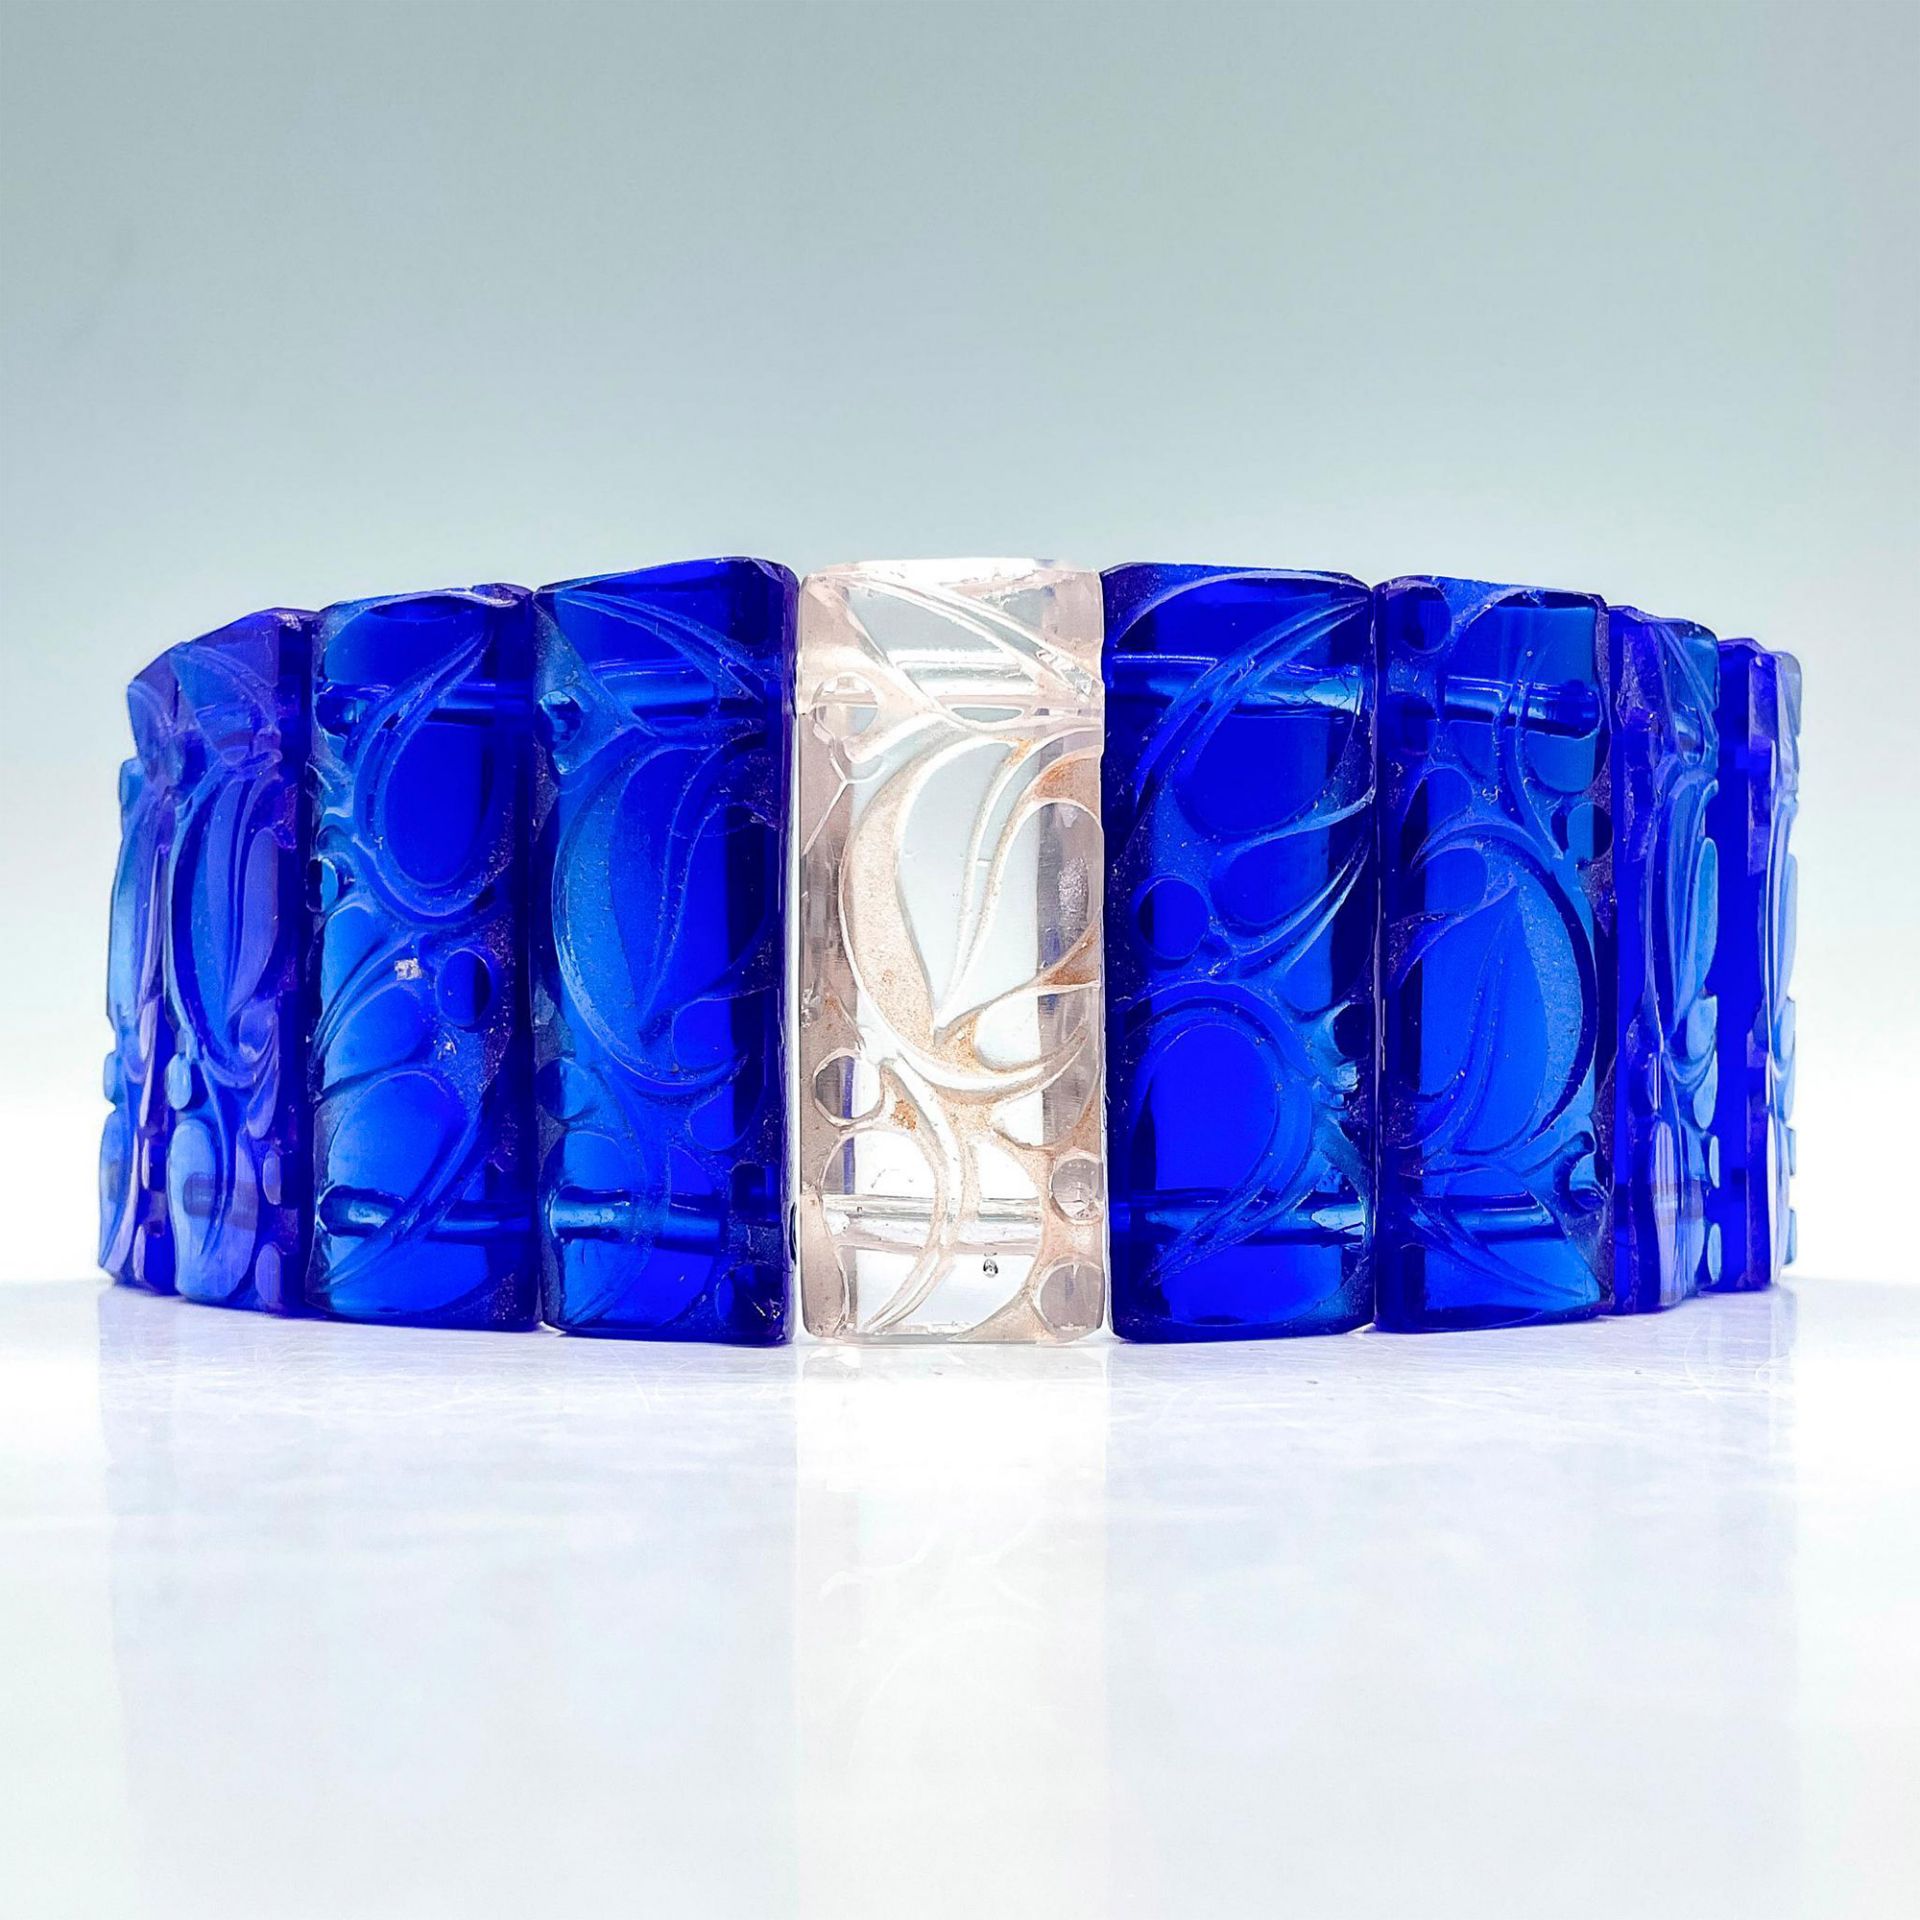 16pc Rene Lalique Glass Bracelet Beads, Sophora